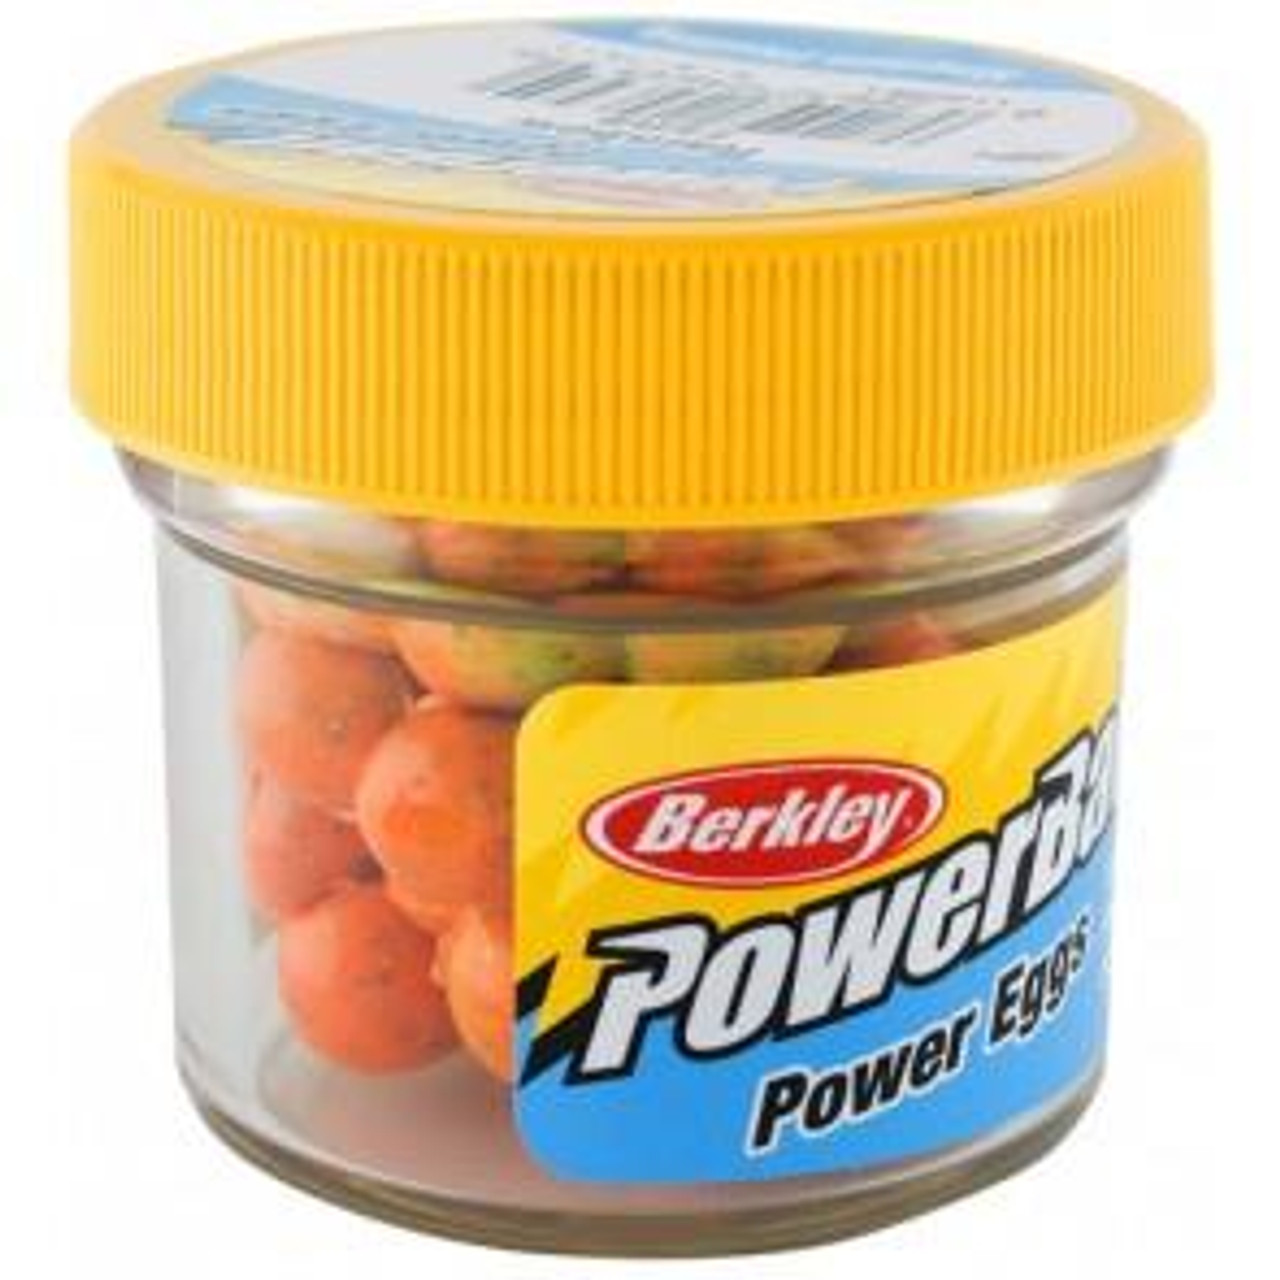 Berkley Powerbait Floating Eggs Garlic - Yeager's Sporting Goods